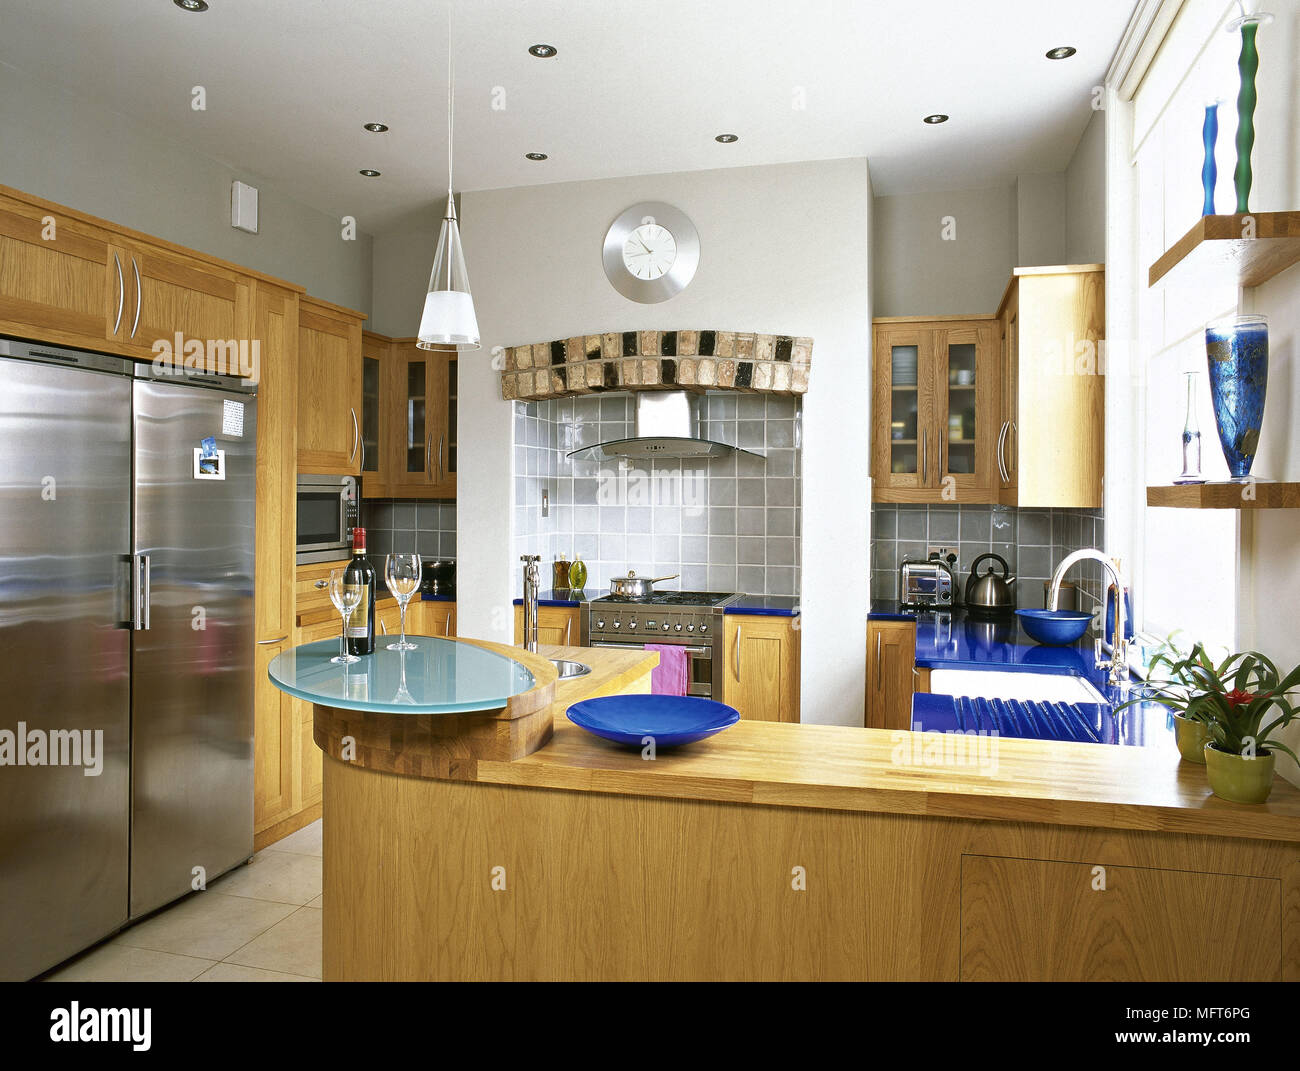 https://c8.alamy.com/comp/MFT6PG/modern-kitchen-wood-units-stainless-steel-fridge-interiors-kitchens-MFT6PG.jpg